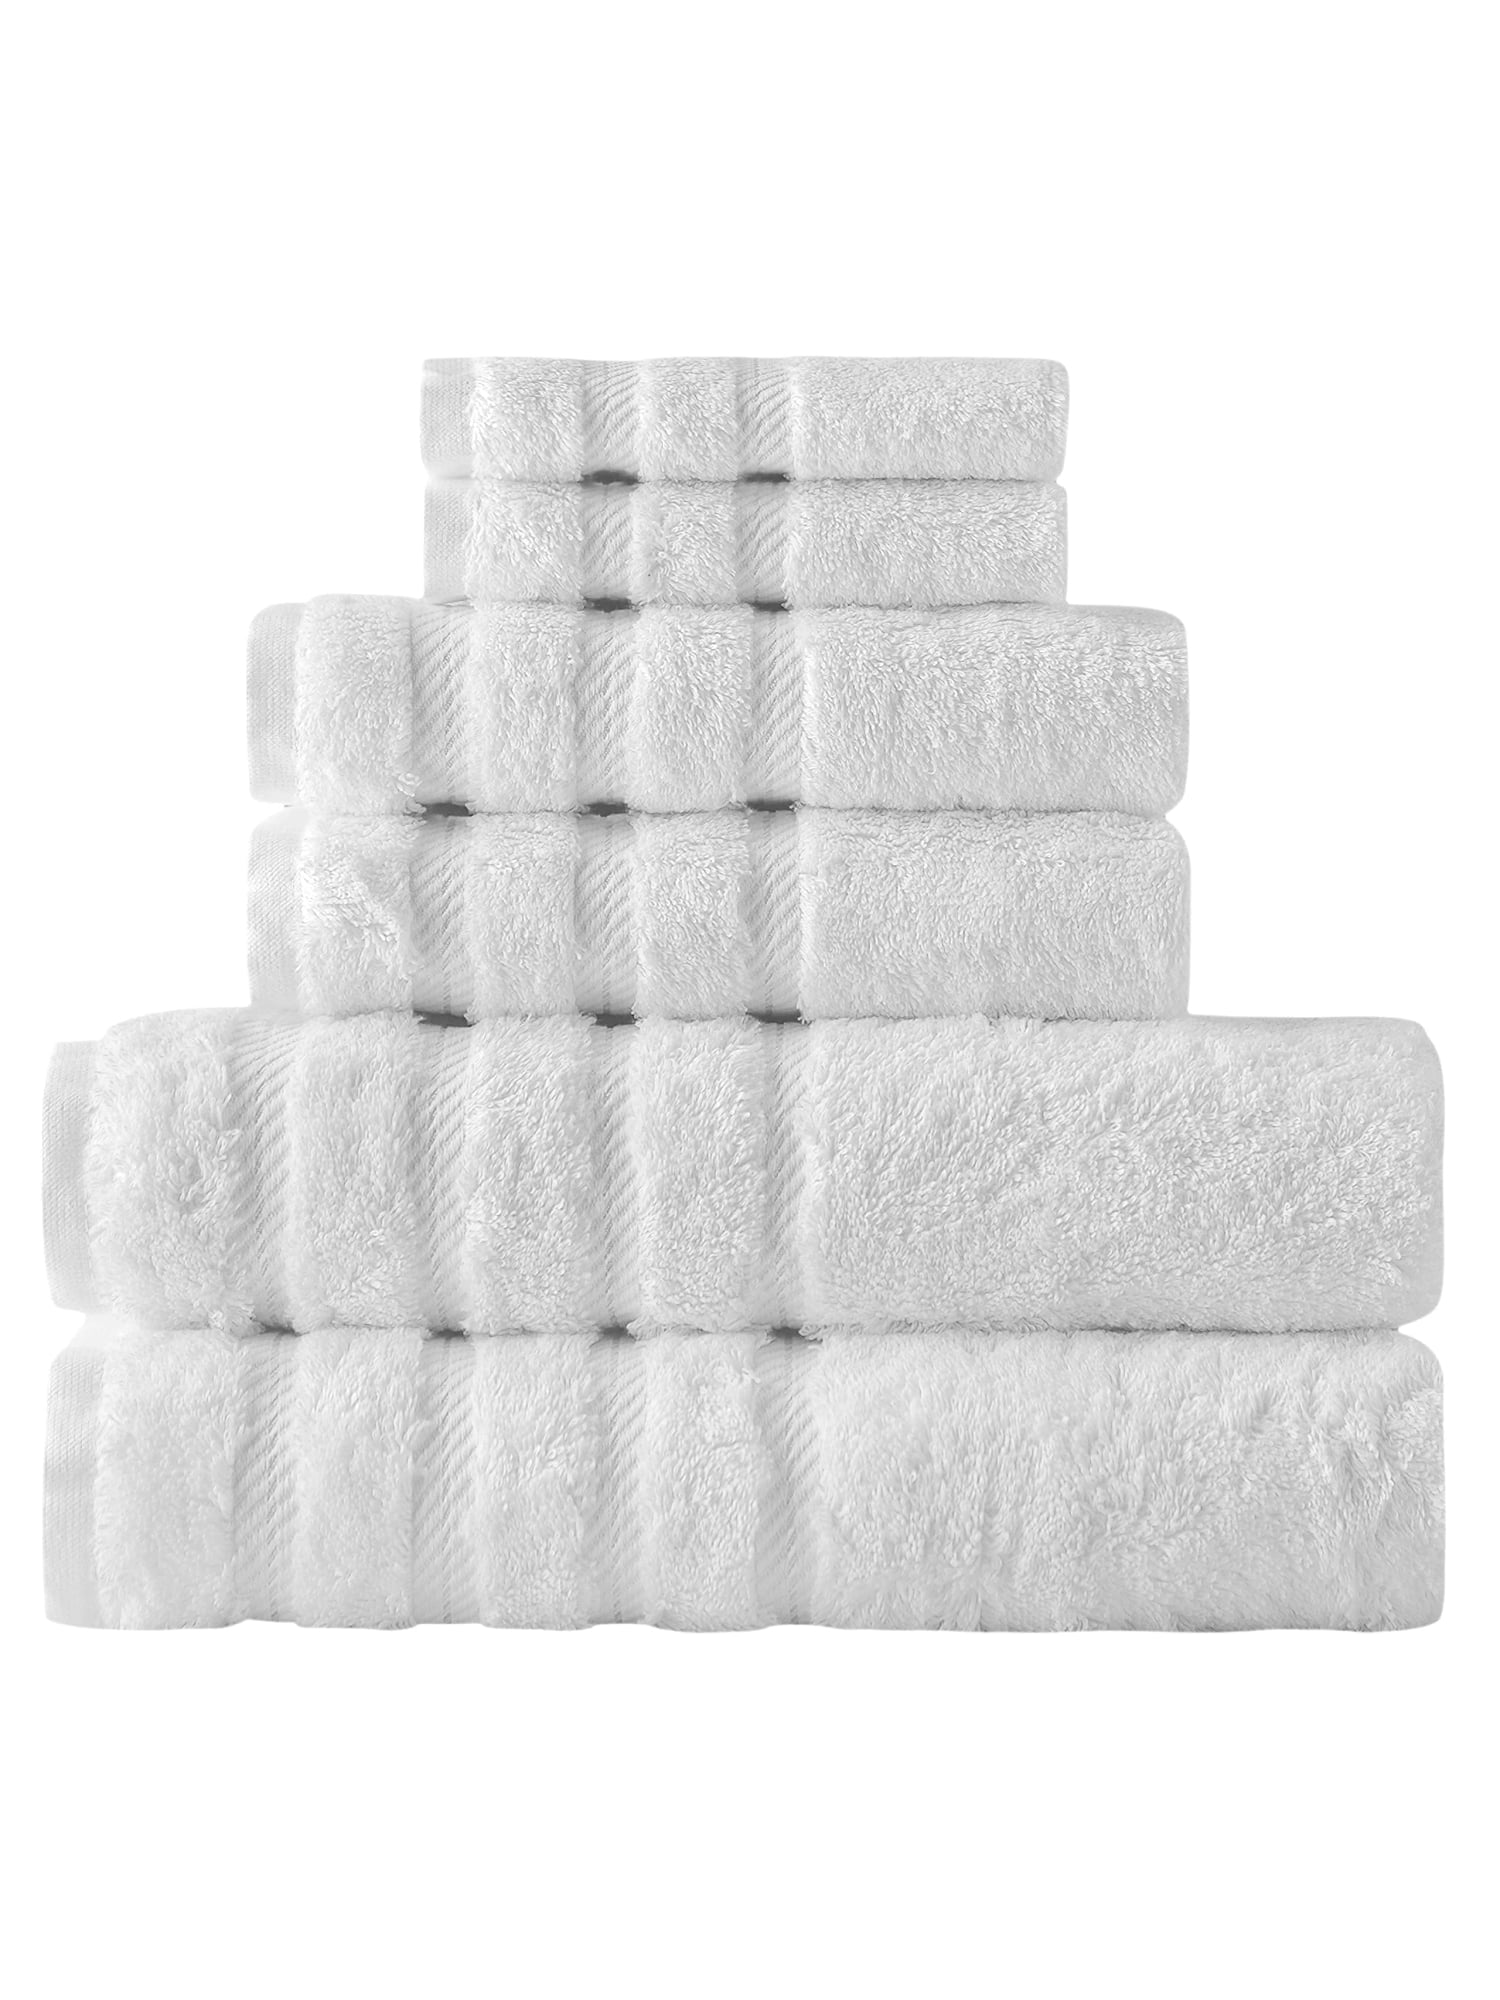 Quick Dry and Highly Absorbent Turkish Cotton Hand Towels Set: Face 18 x 38 inches Bath Yoga Sauna Peshtemal Towel Set Travel Super Soft Kitchen Tea Dish Cloth Set Gym Set of 3 